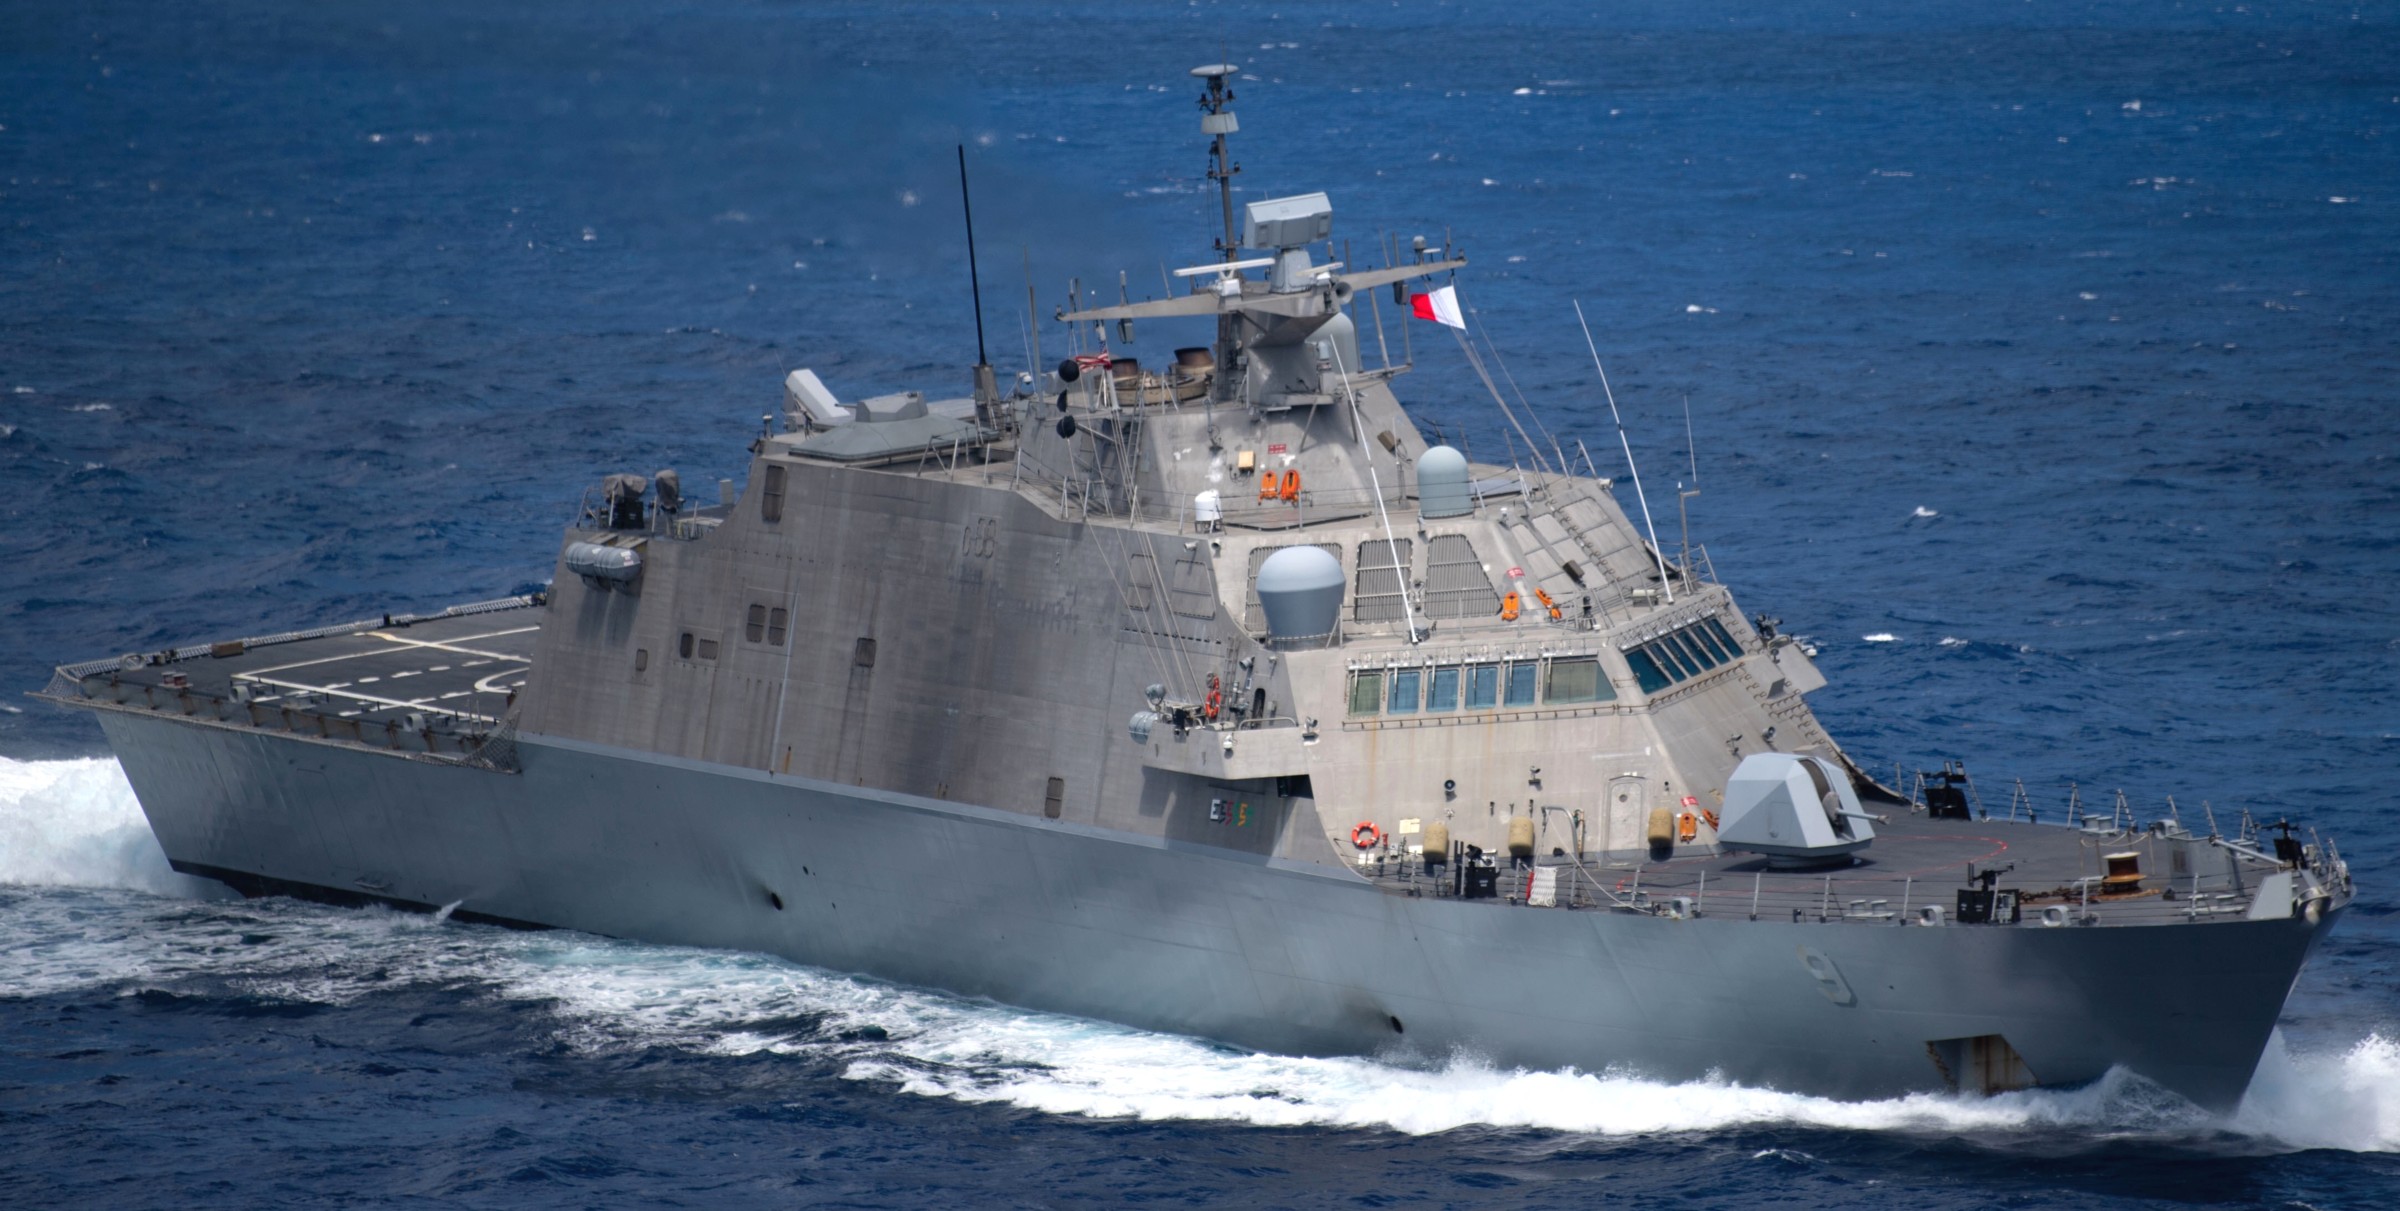 lcs-9 uss little rock freedom class littoral combat ship us navy 31 caribbean sea